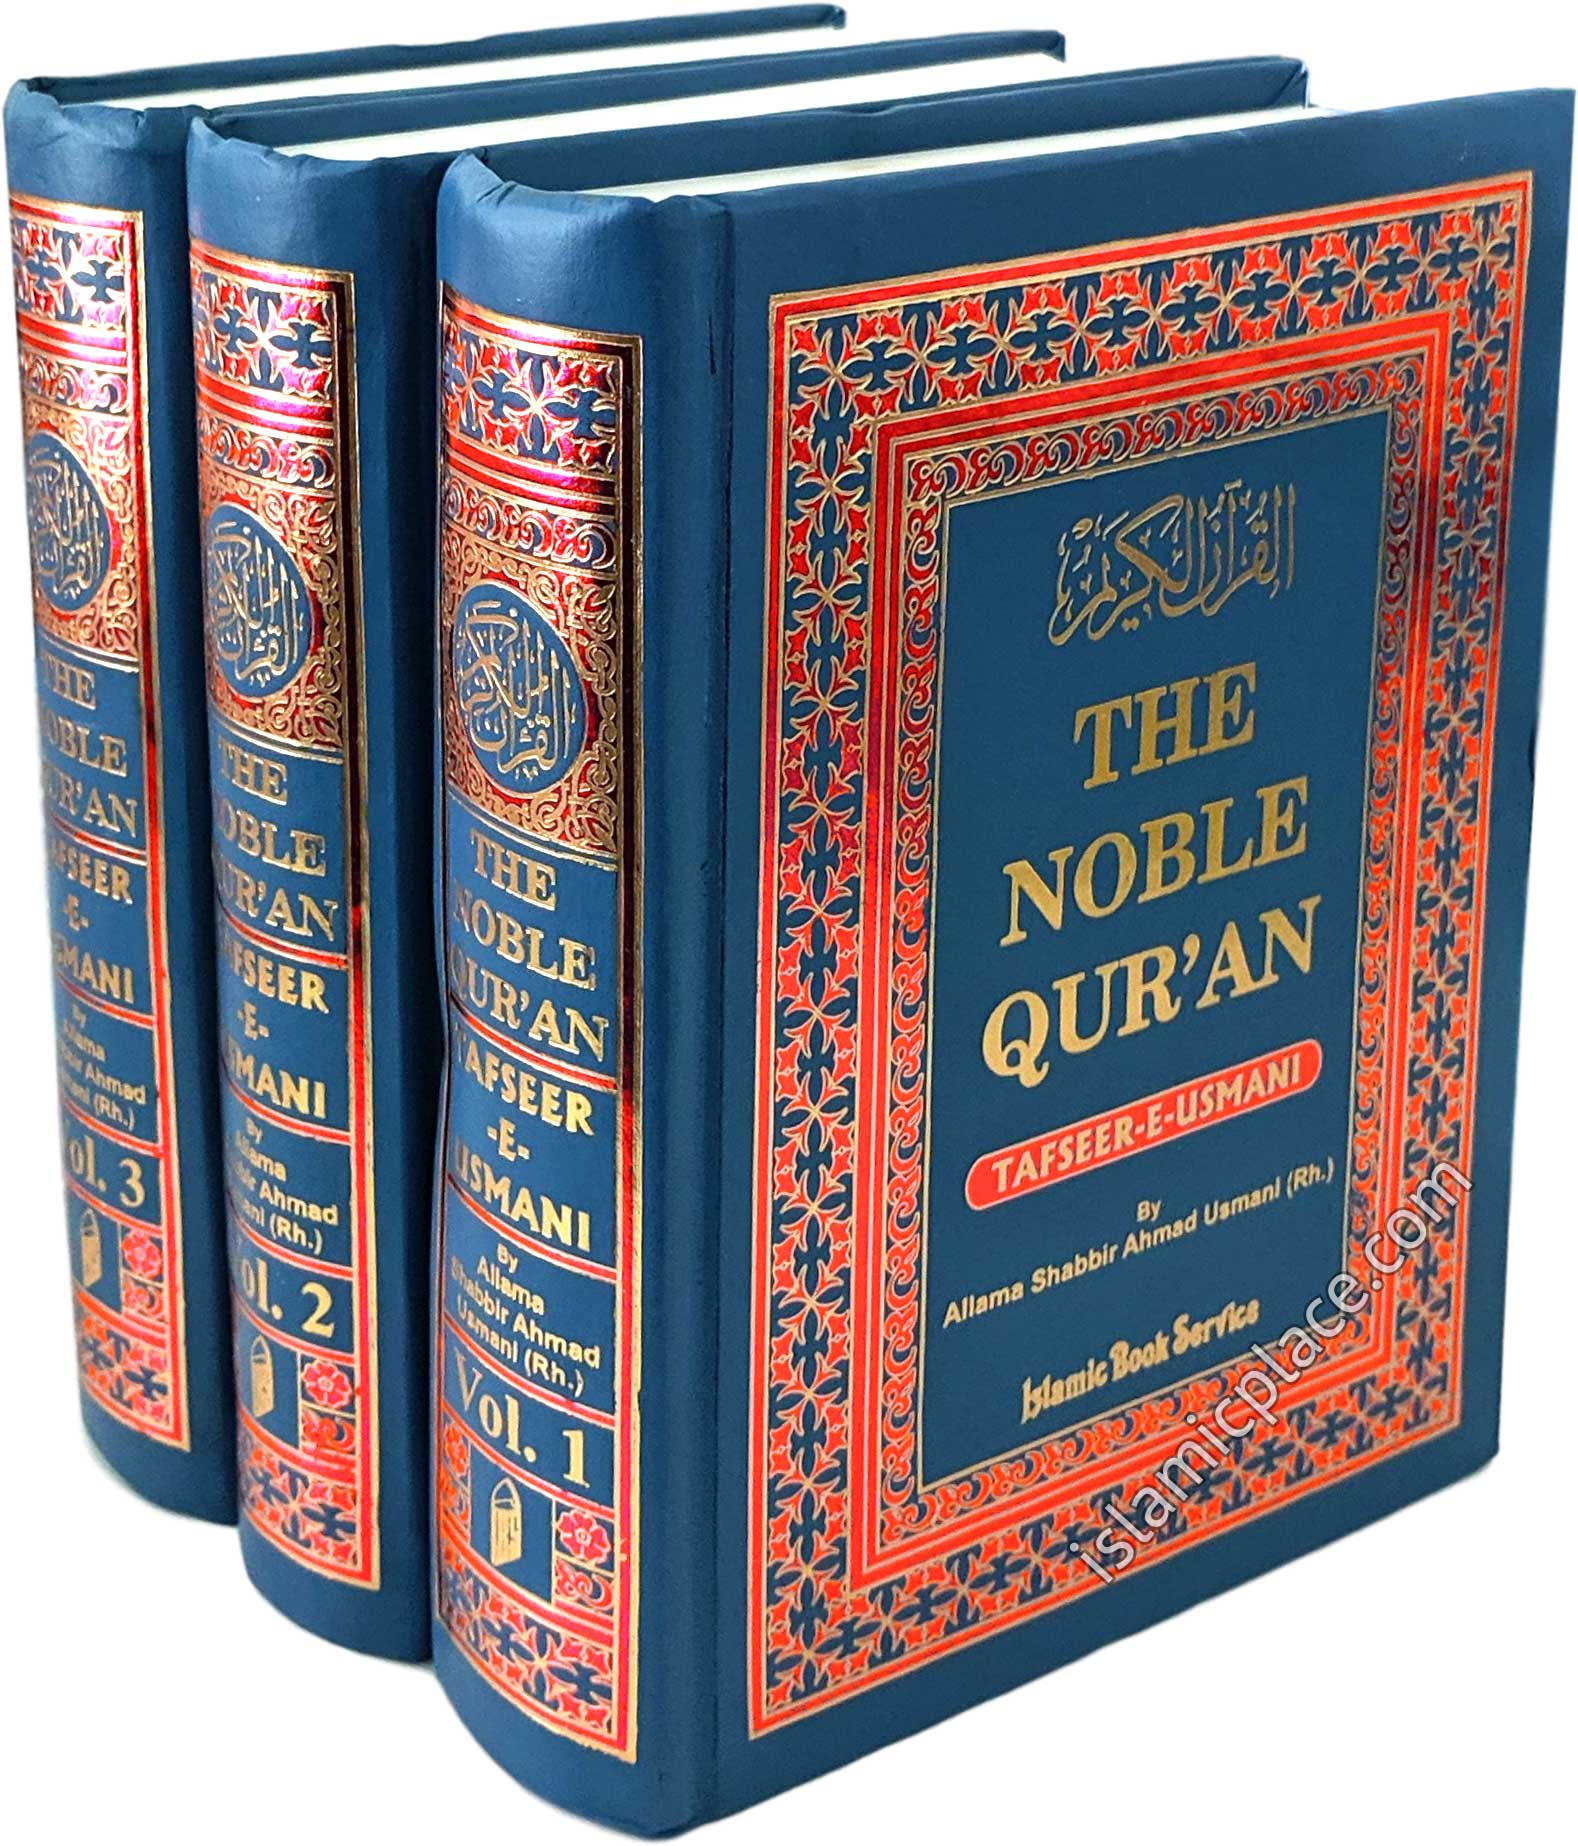 [3 vol set] The Noble Qur'an - Tafseer-e-Usmani (Blue cover)